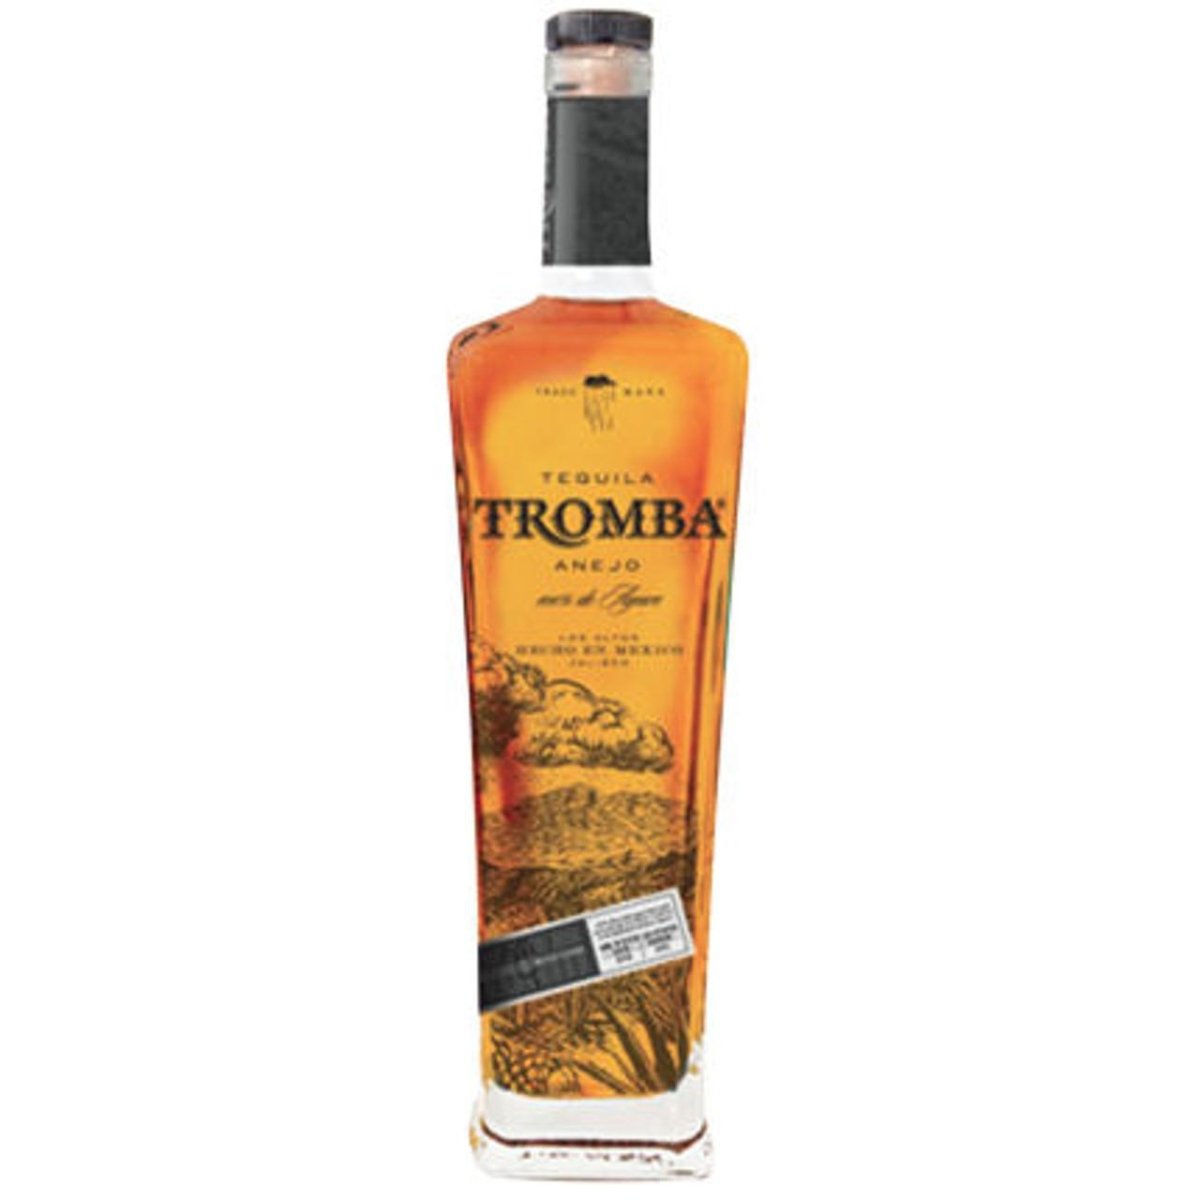 Tromba - Tequila Anejo (750ML) - The Epicurean Trader